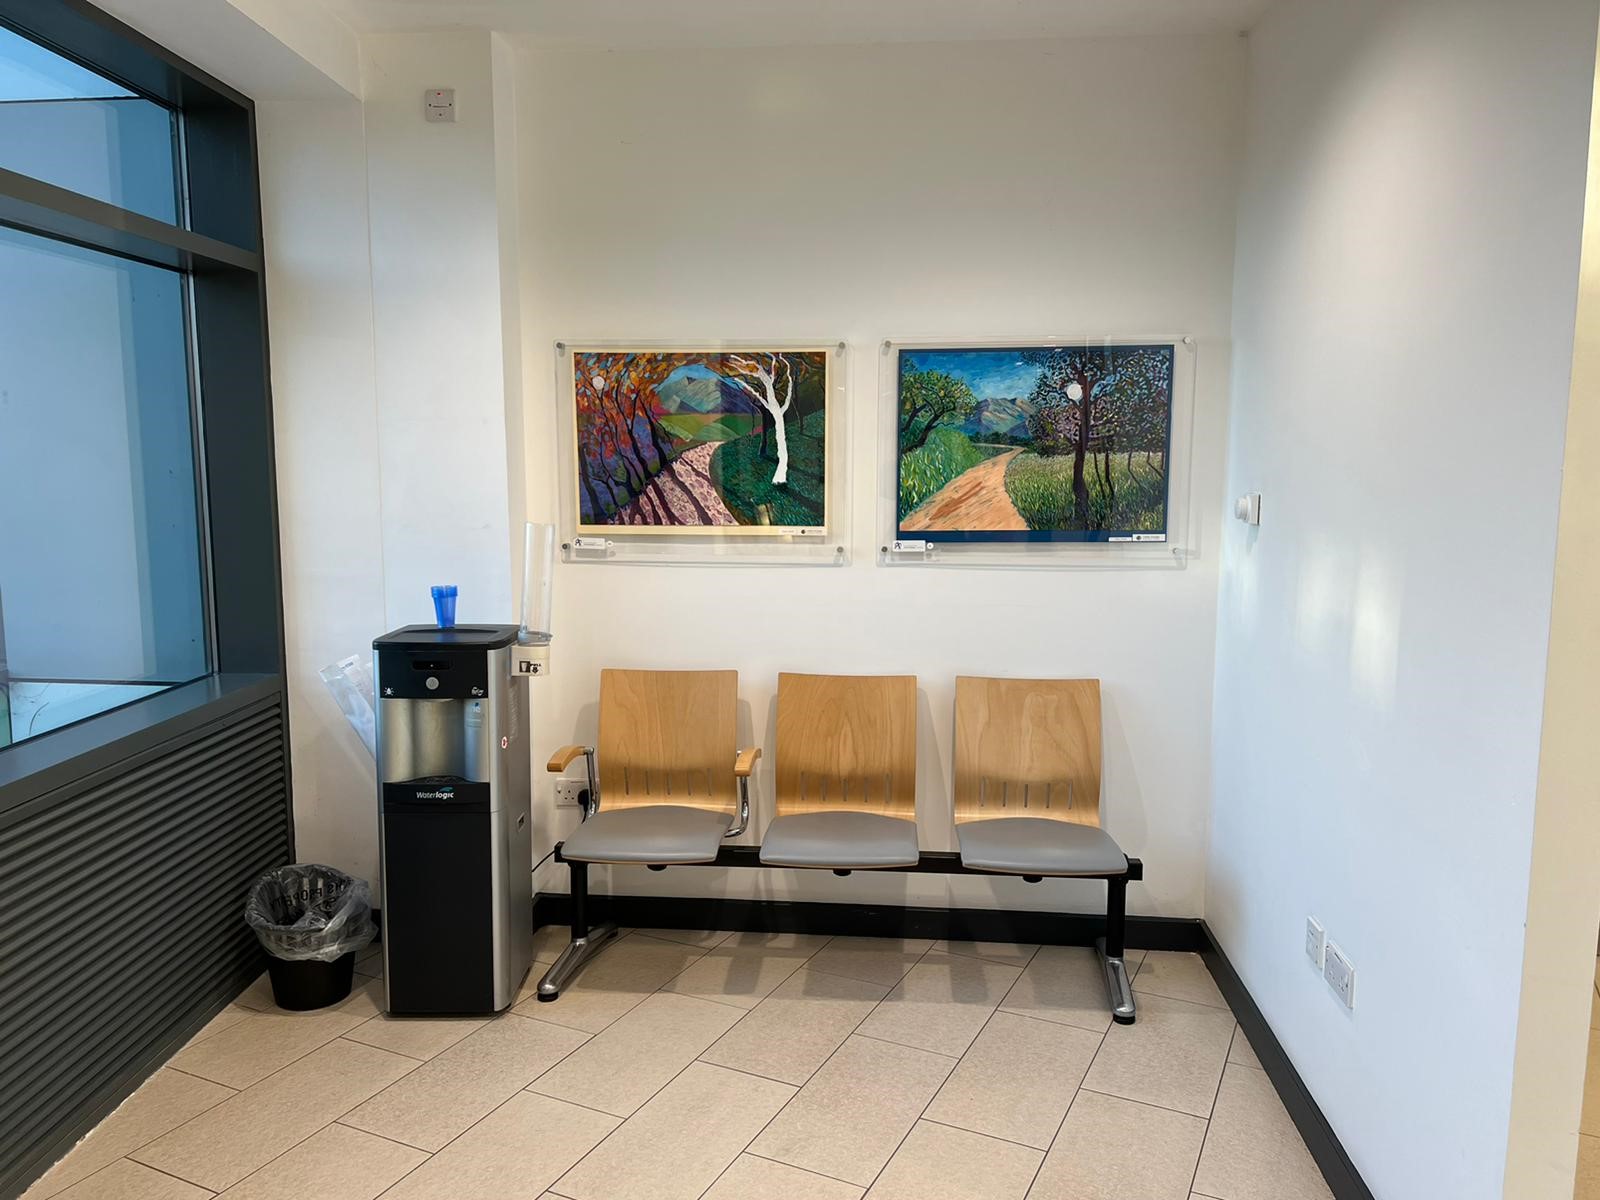 Community Cardiology waiting area